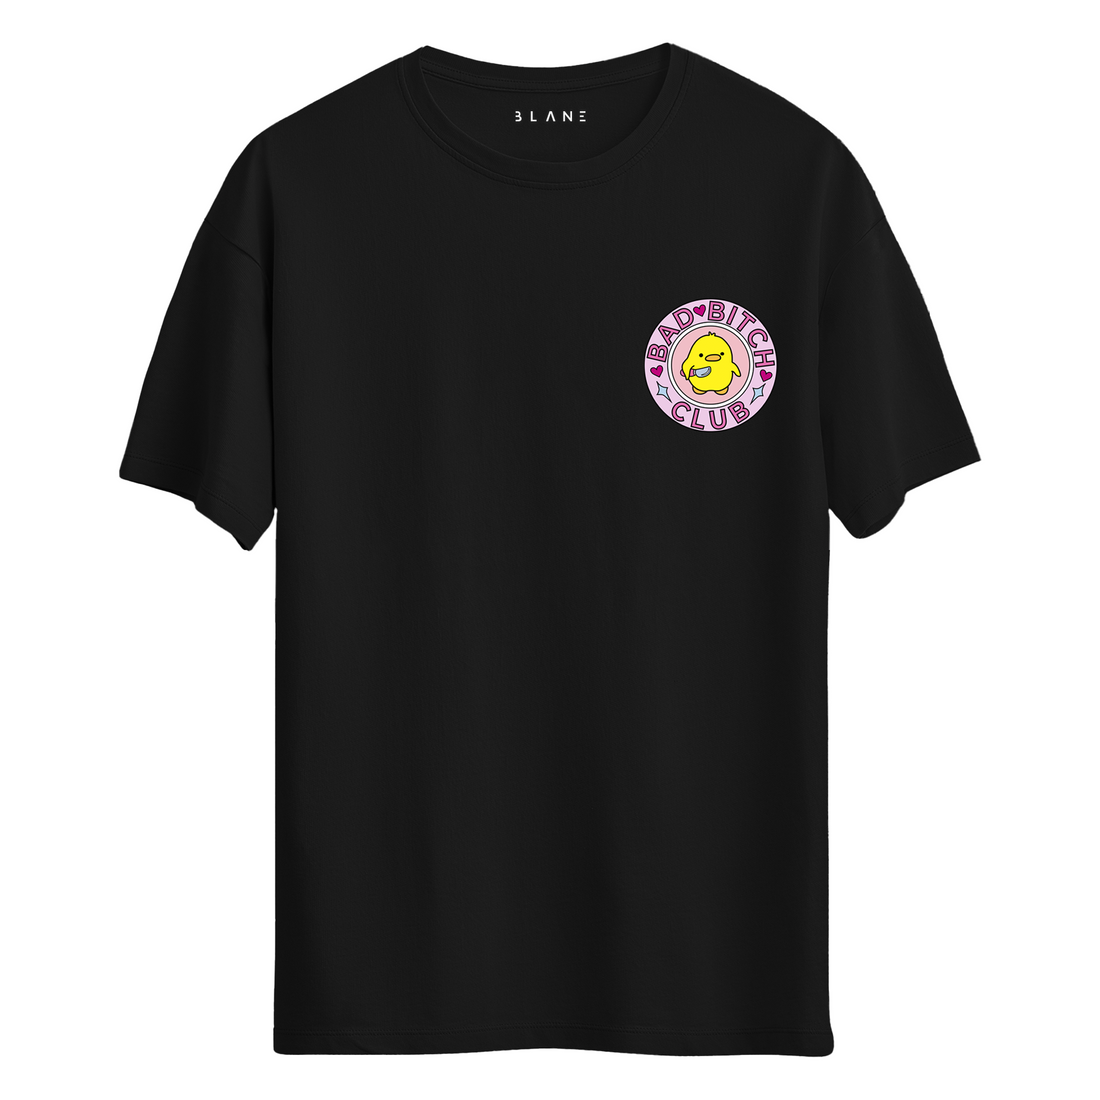 Bad Bitch Club - T-Shirt